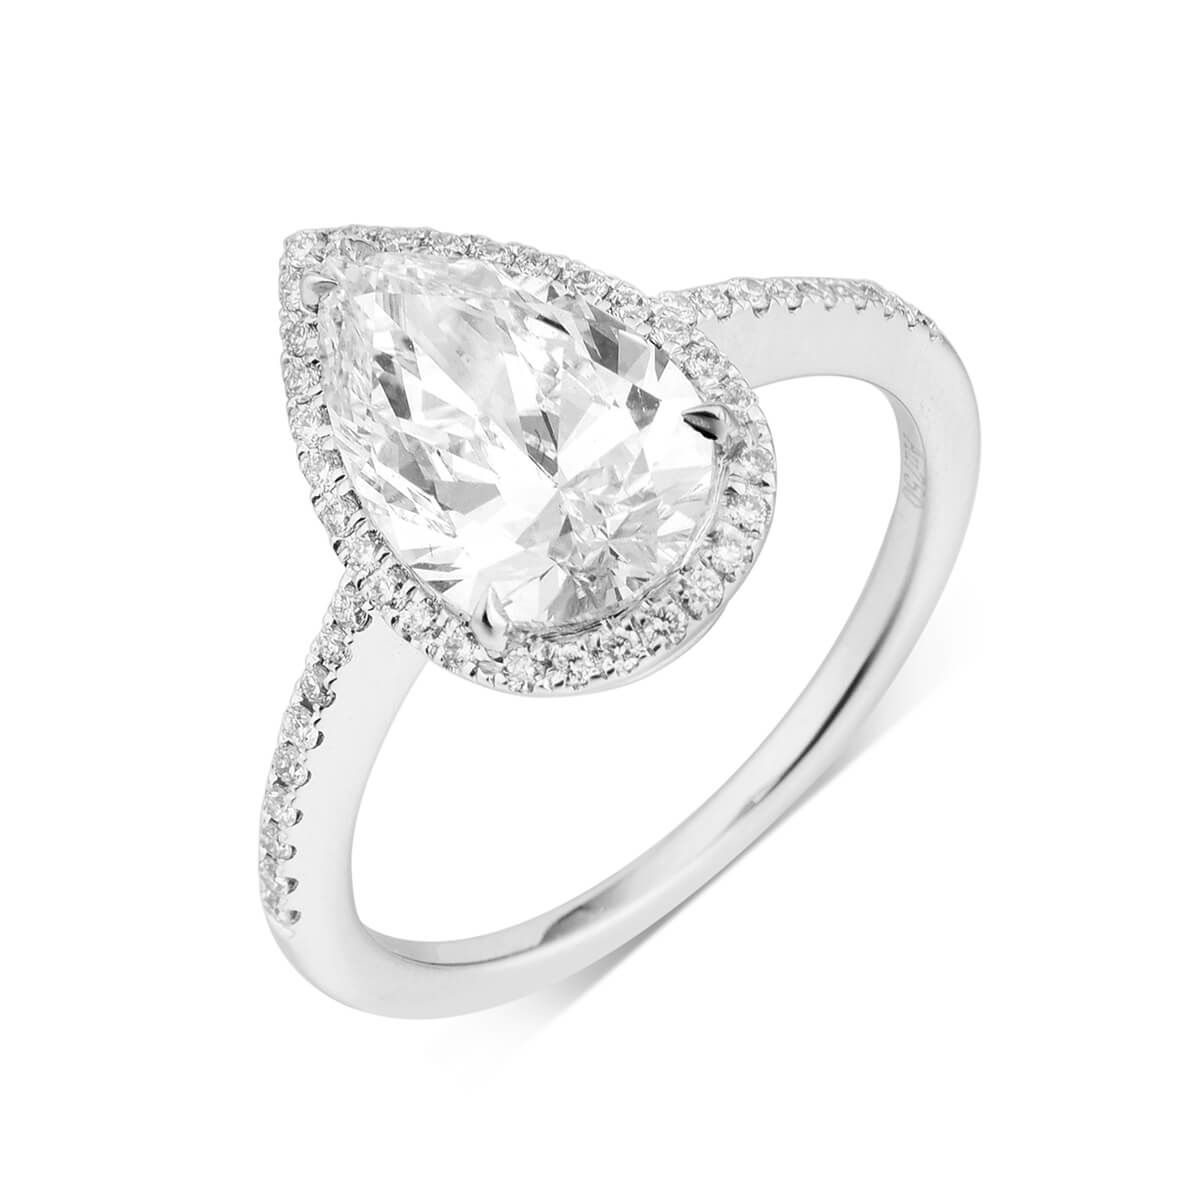  White Diamond Ring, 2.29 Ct. TW, Pear shape, GIA Certified, 5181543743